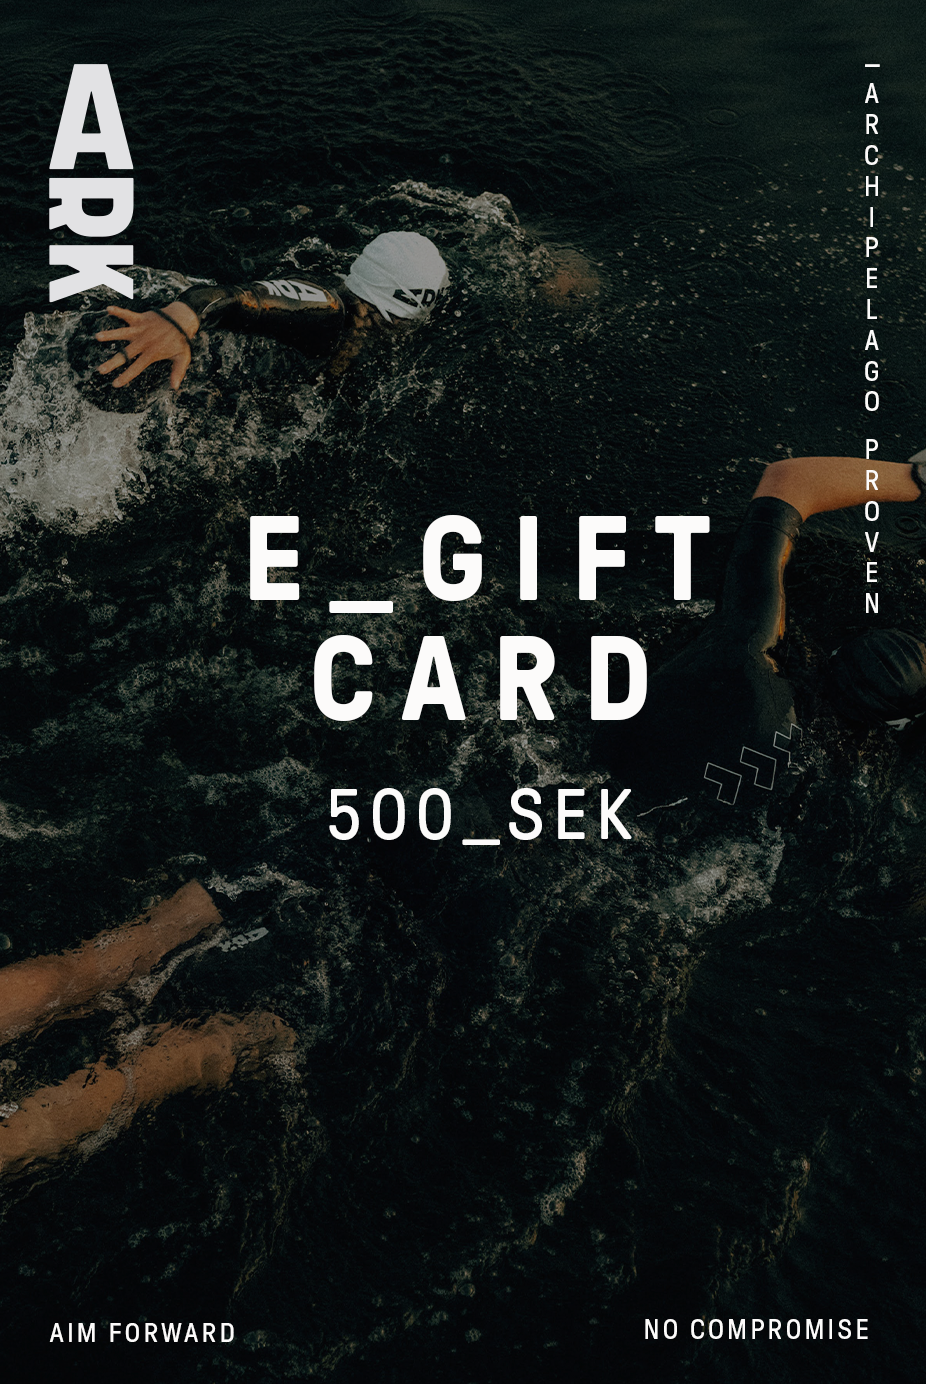 Product photo of ARK Digital Gift Card 500 SEK